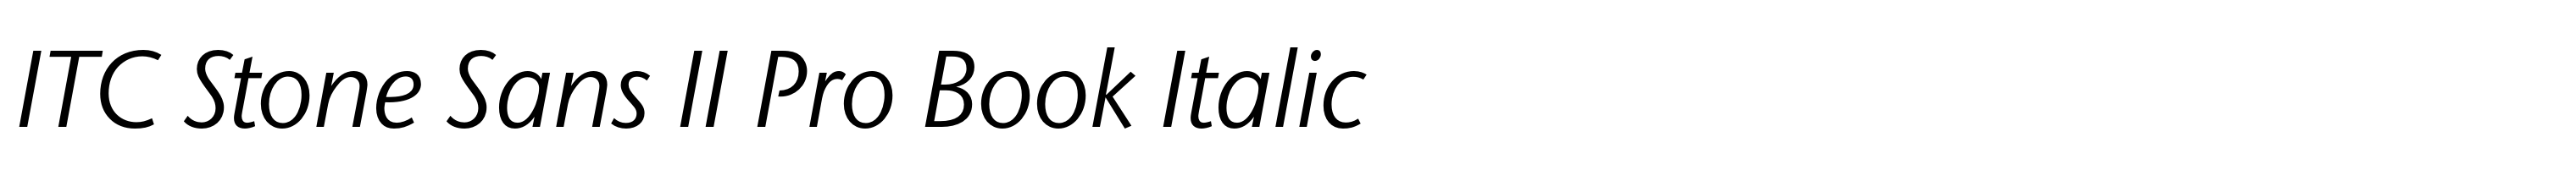 ITC Stone Sans II Pro Book Italic